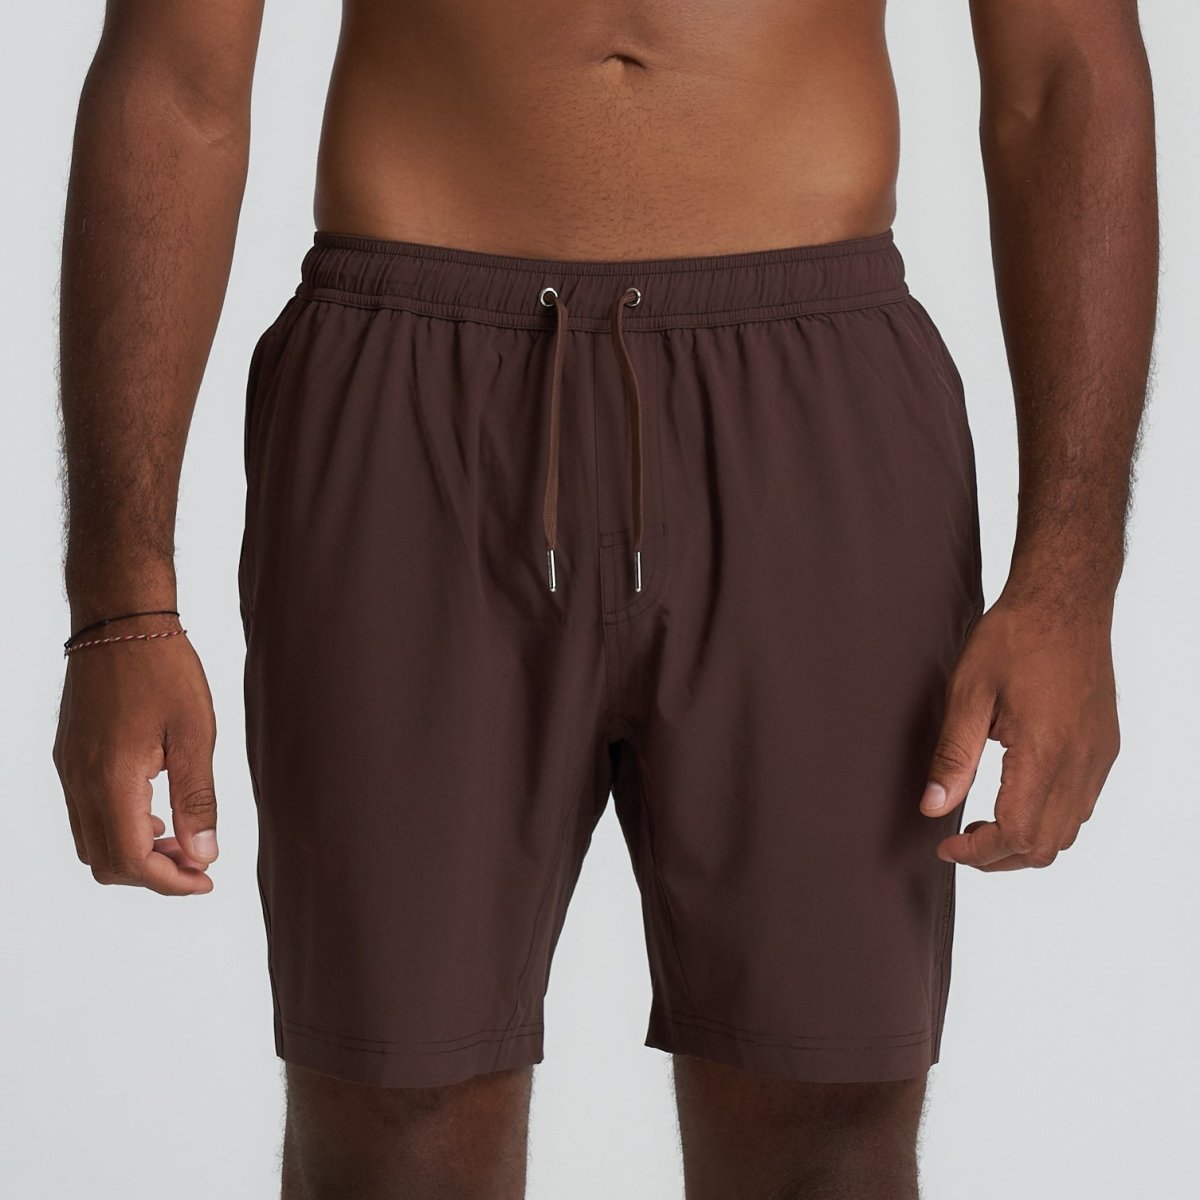 Tunnel Vision 9” - Brown Shorts - Bamboo Ave. - Men's Shorts